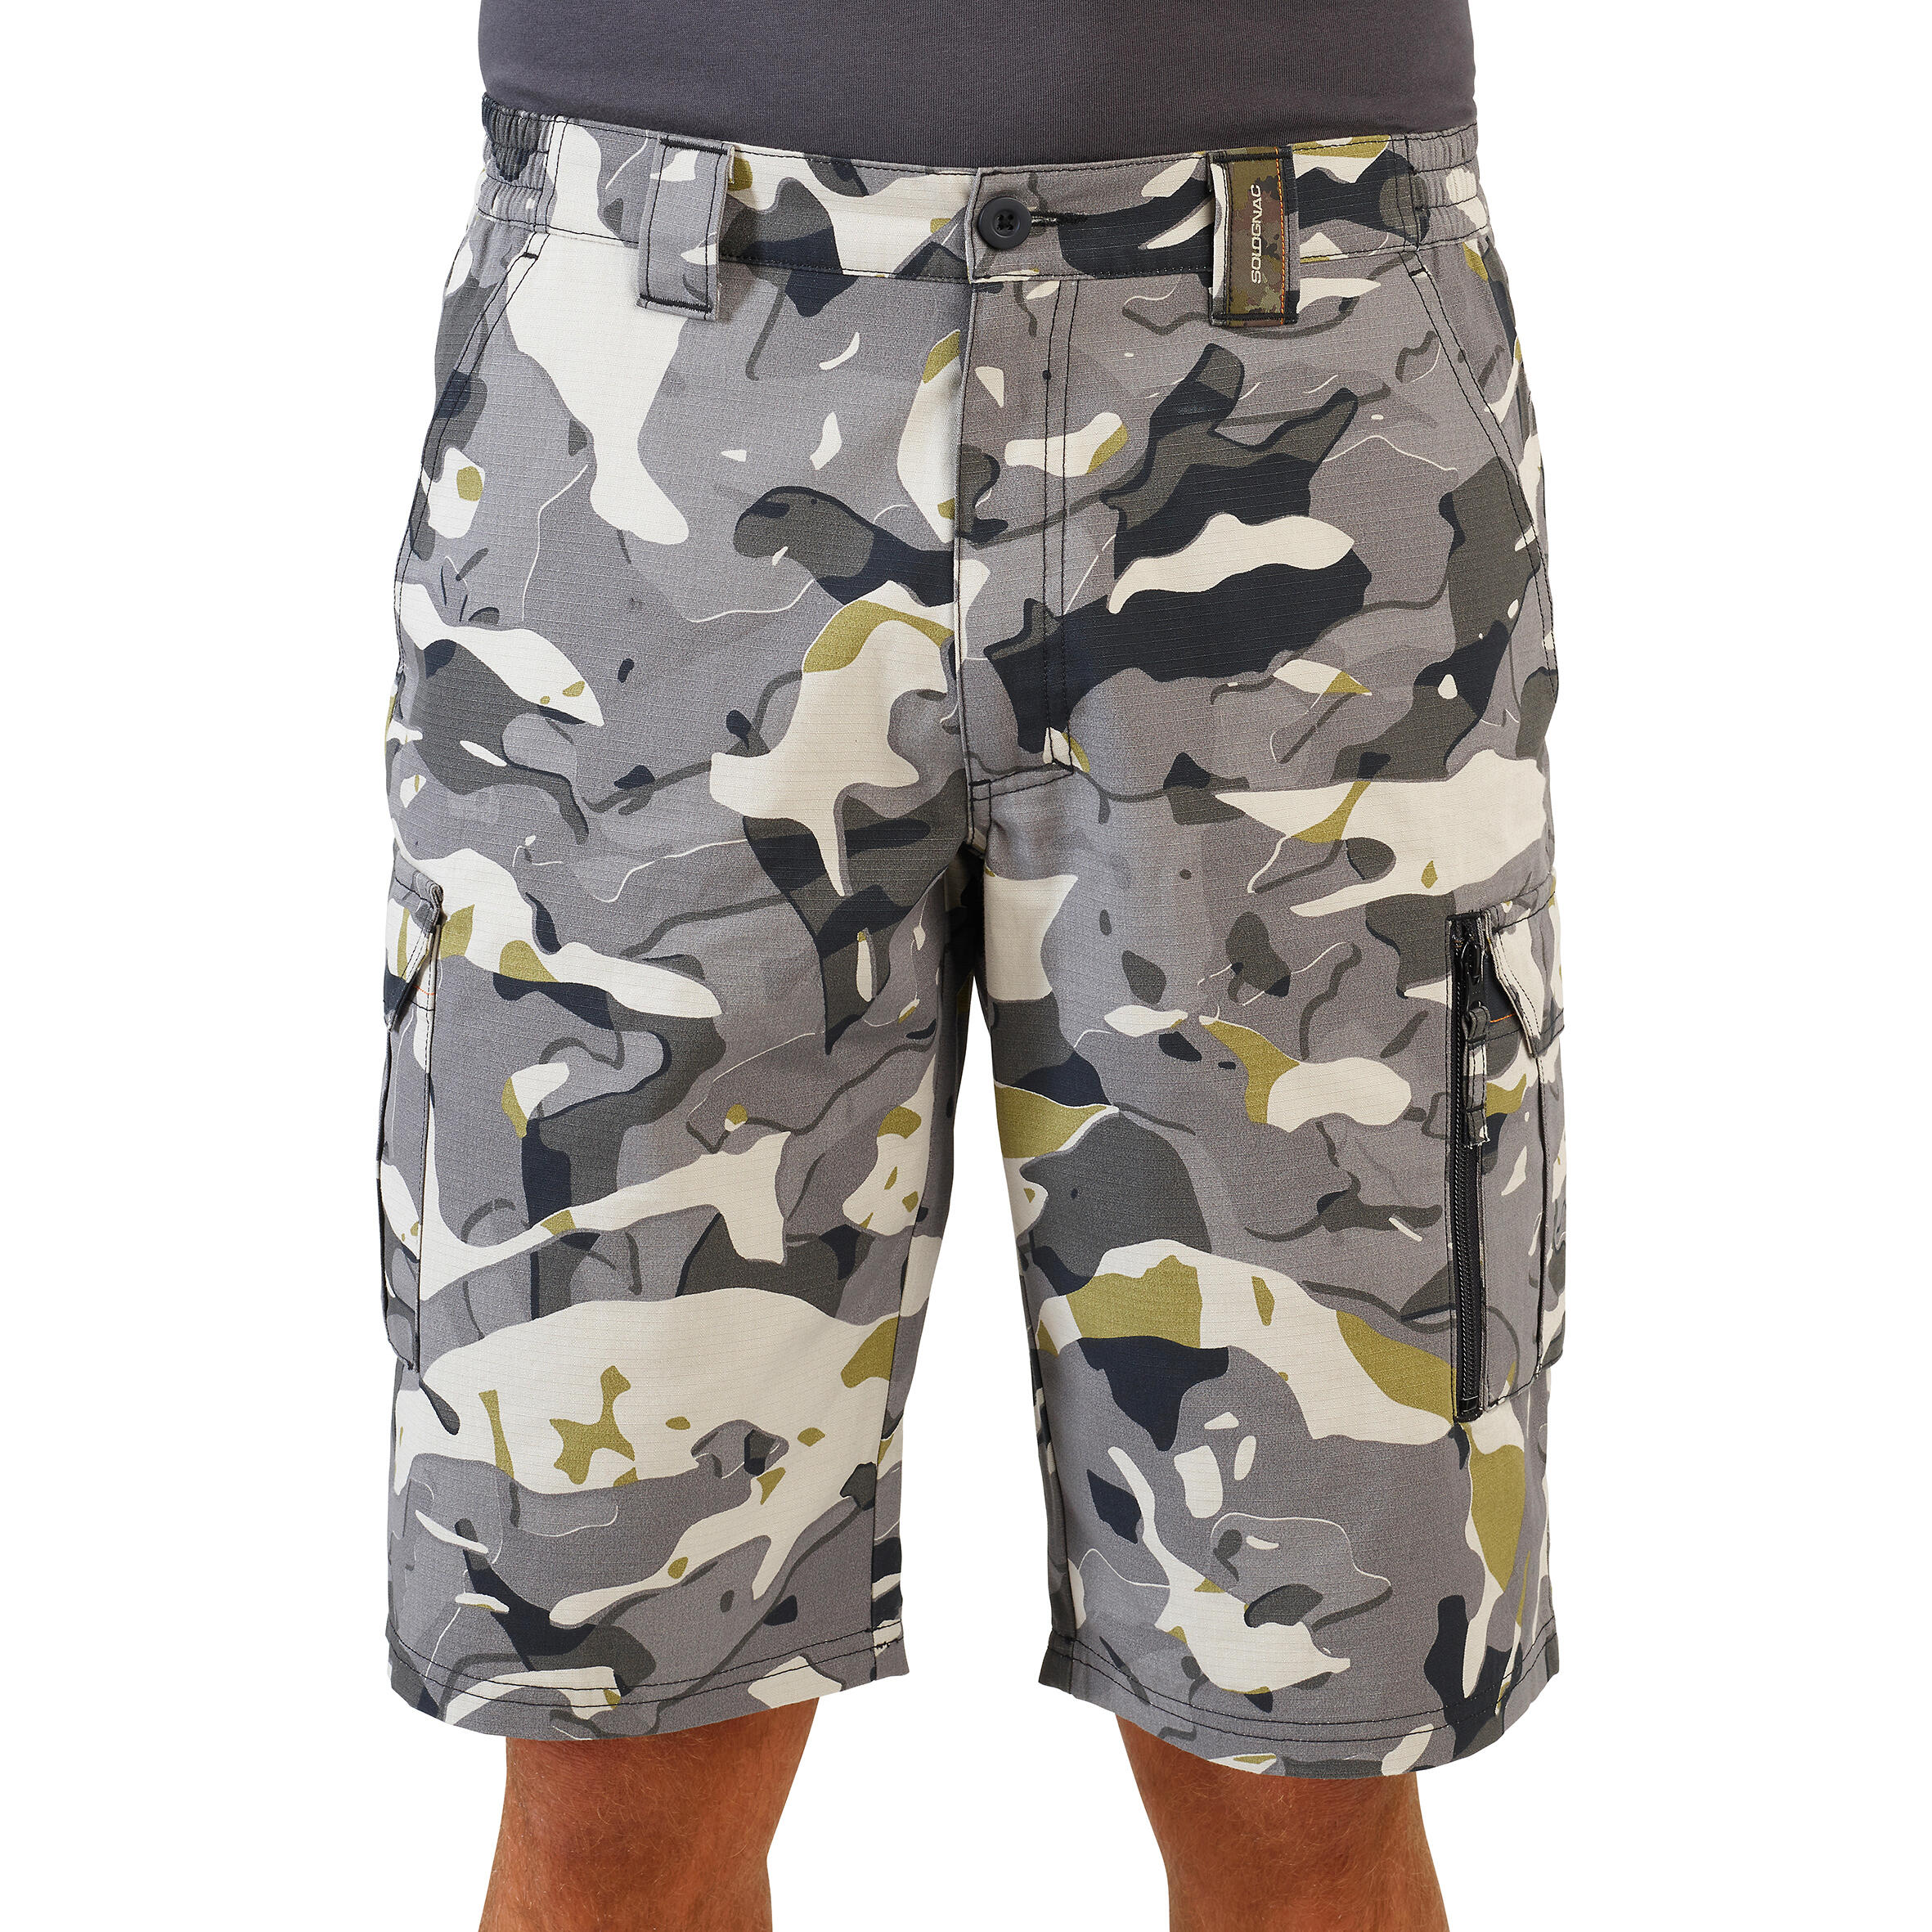 Bermuda shorts 500 - Woodland V1 mineral grey LTD camouflage 3/13